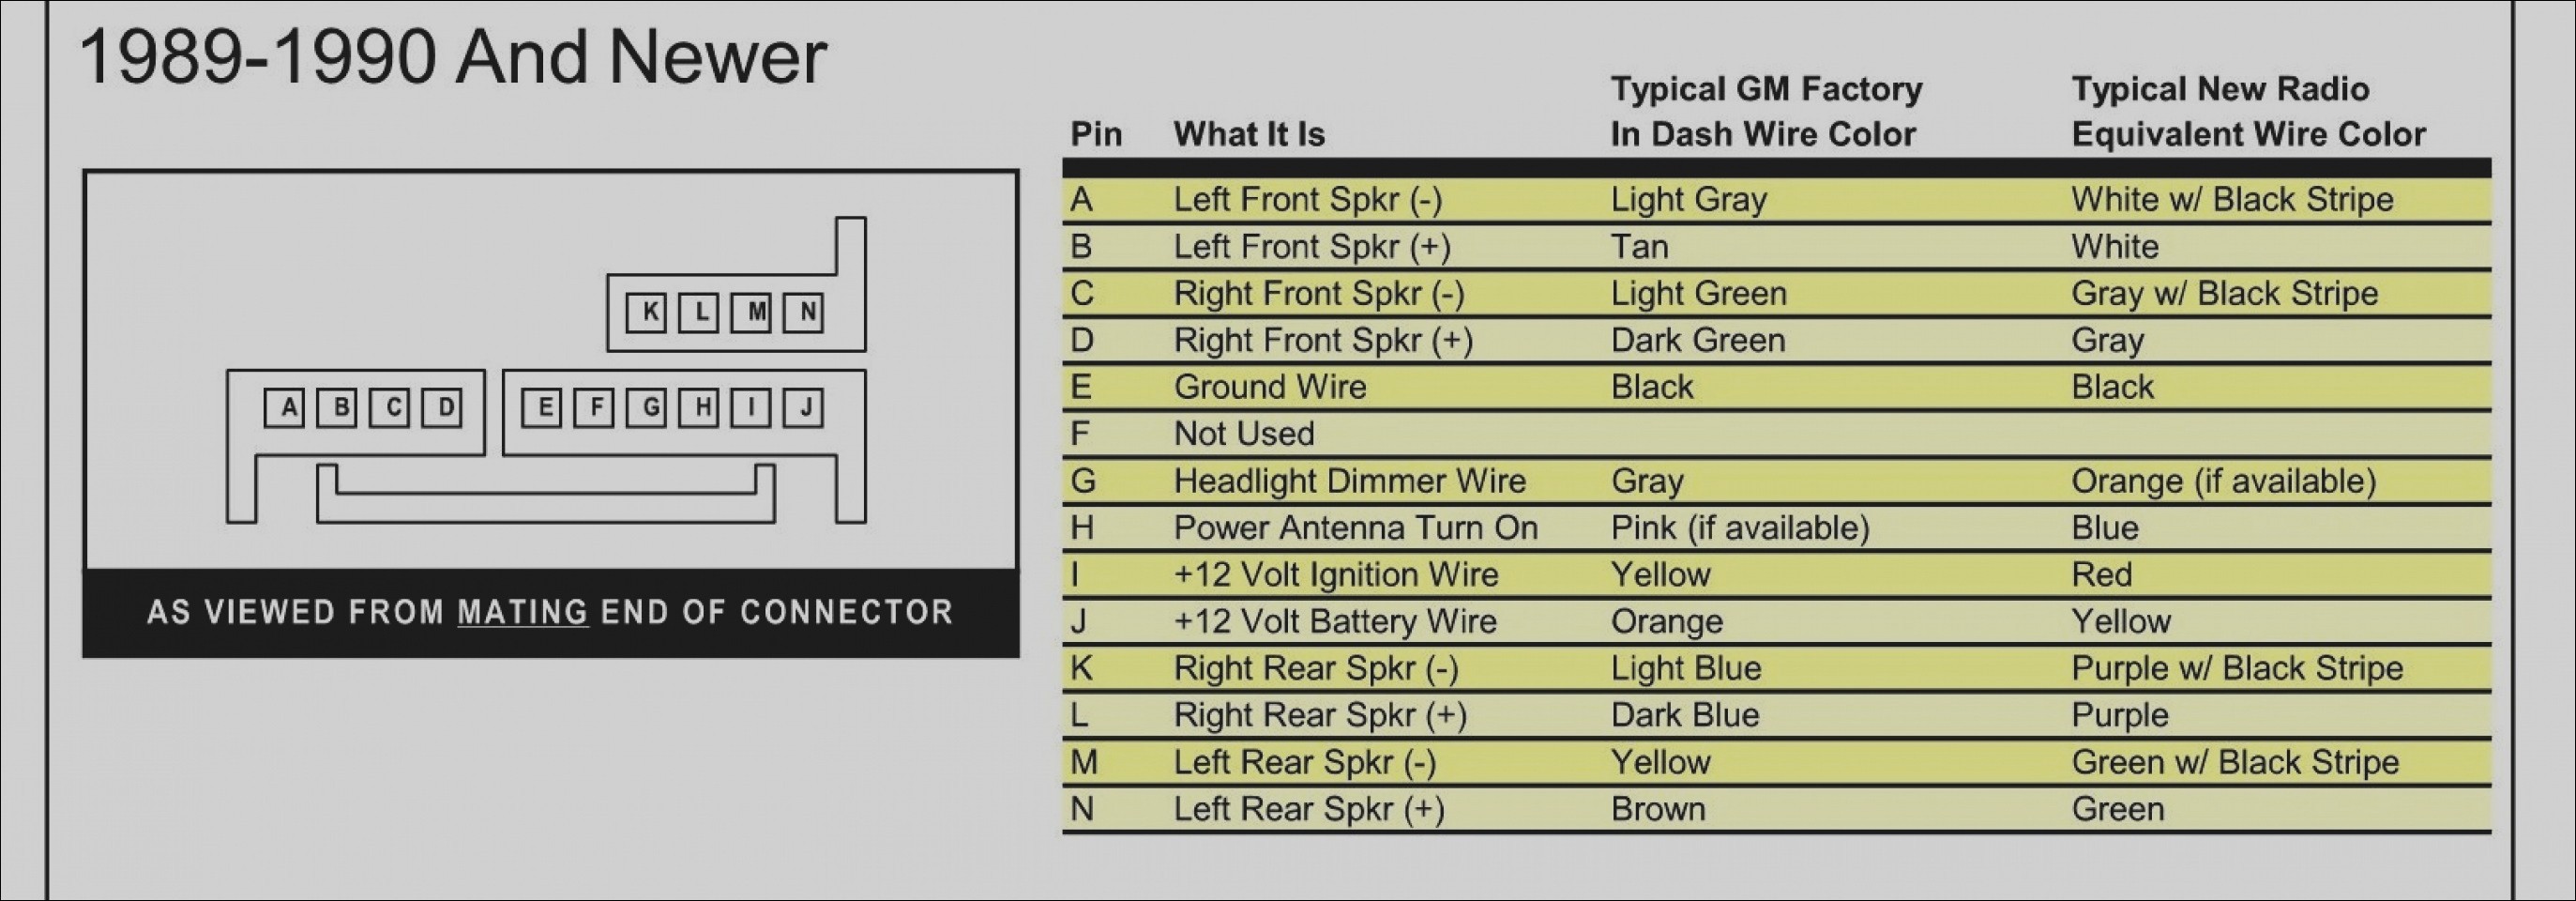 2007 Chevy Trailblazer Radio Wiring Chevrolet Wiring Diagrams